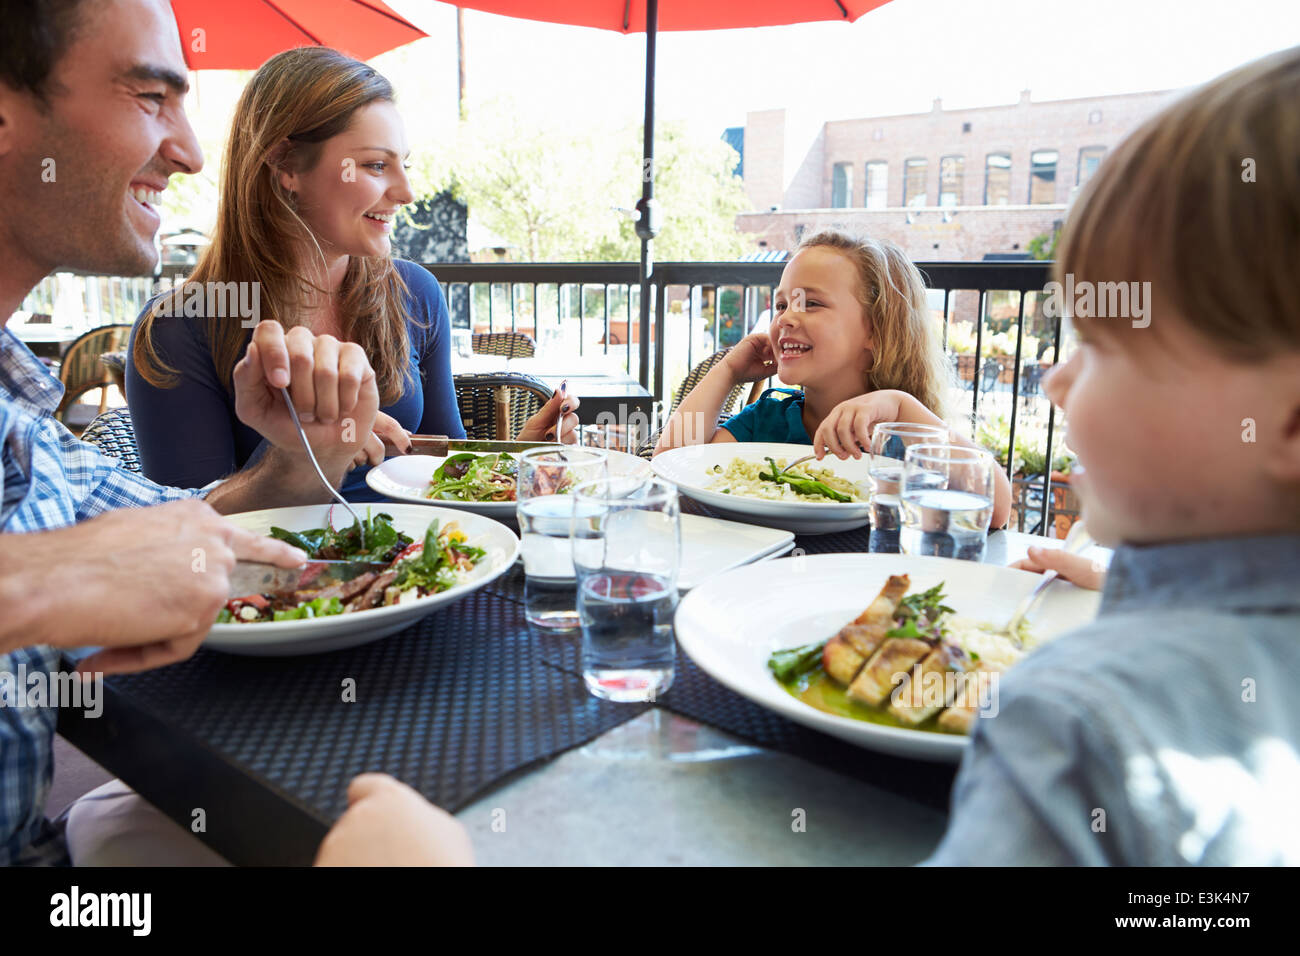 Family Enjoying Meal At Outdoor Restaurant Stock Photo